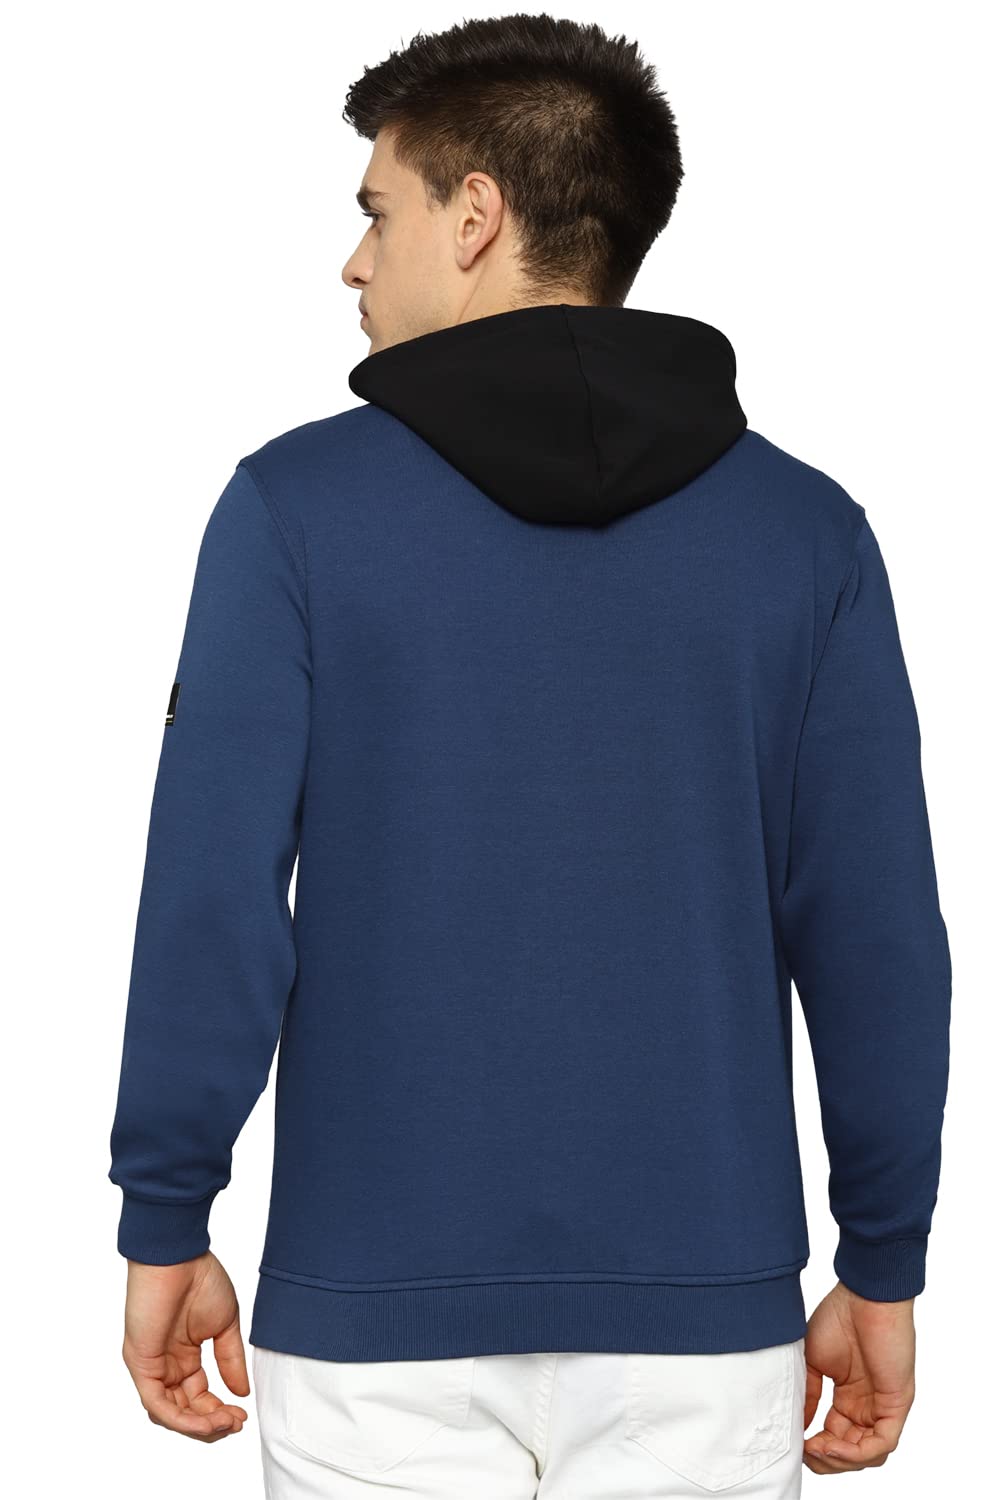 Allen Solly Solid Cotton Regular Fit Mens Sweatshirt (Blue, Small) 